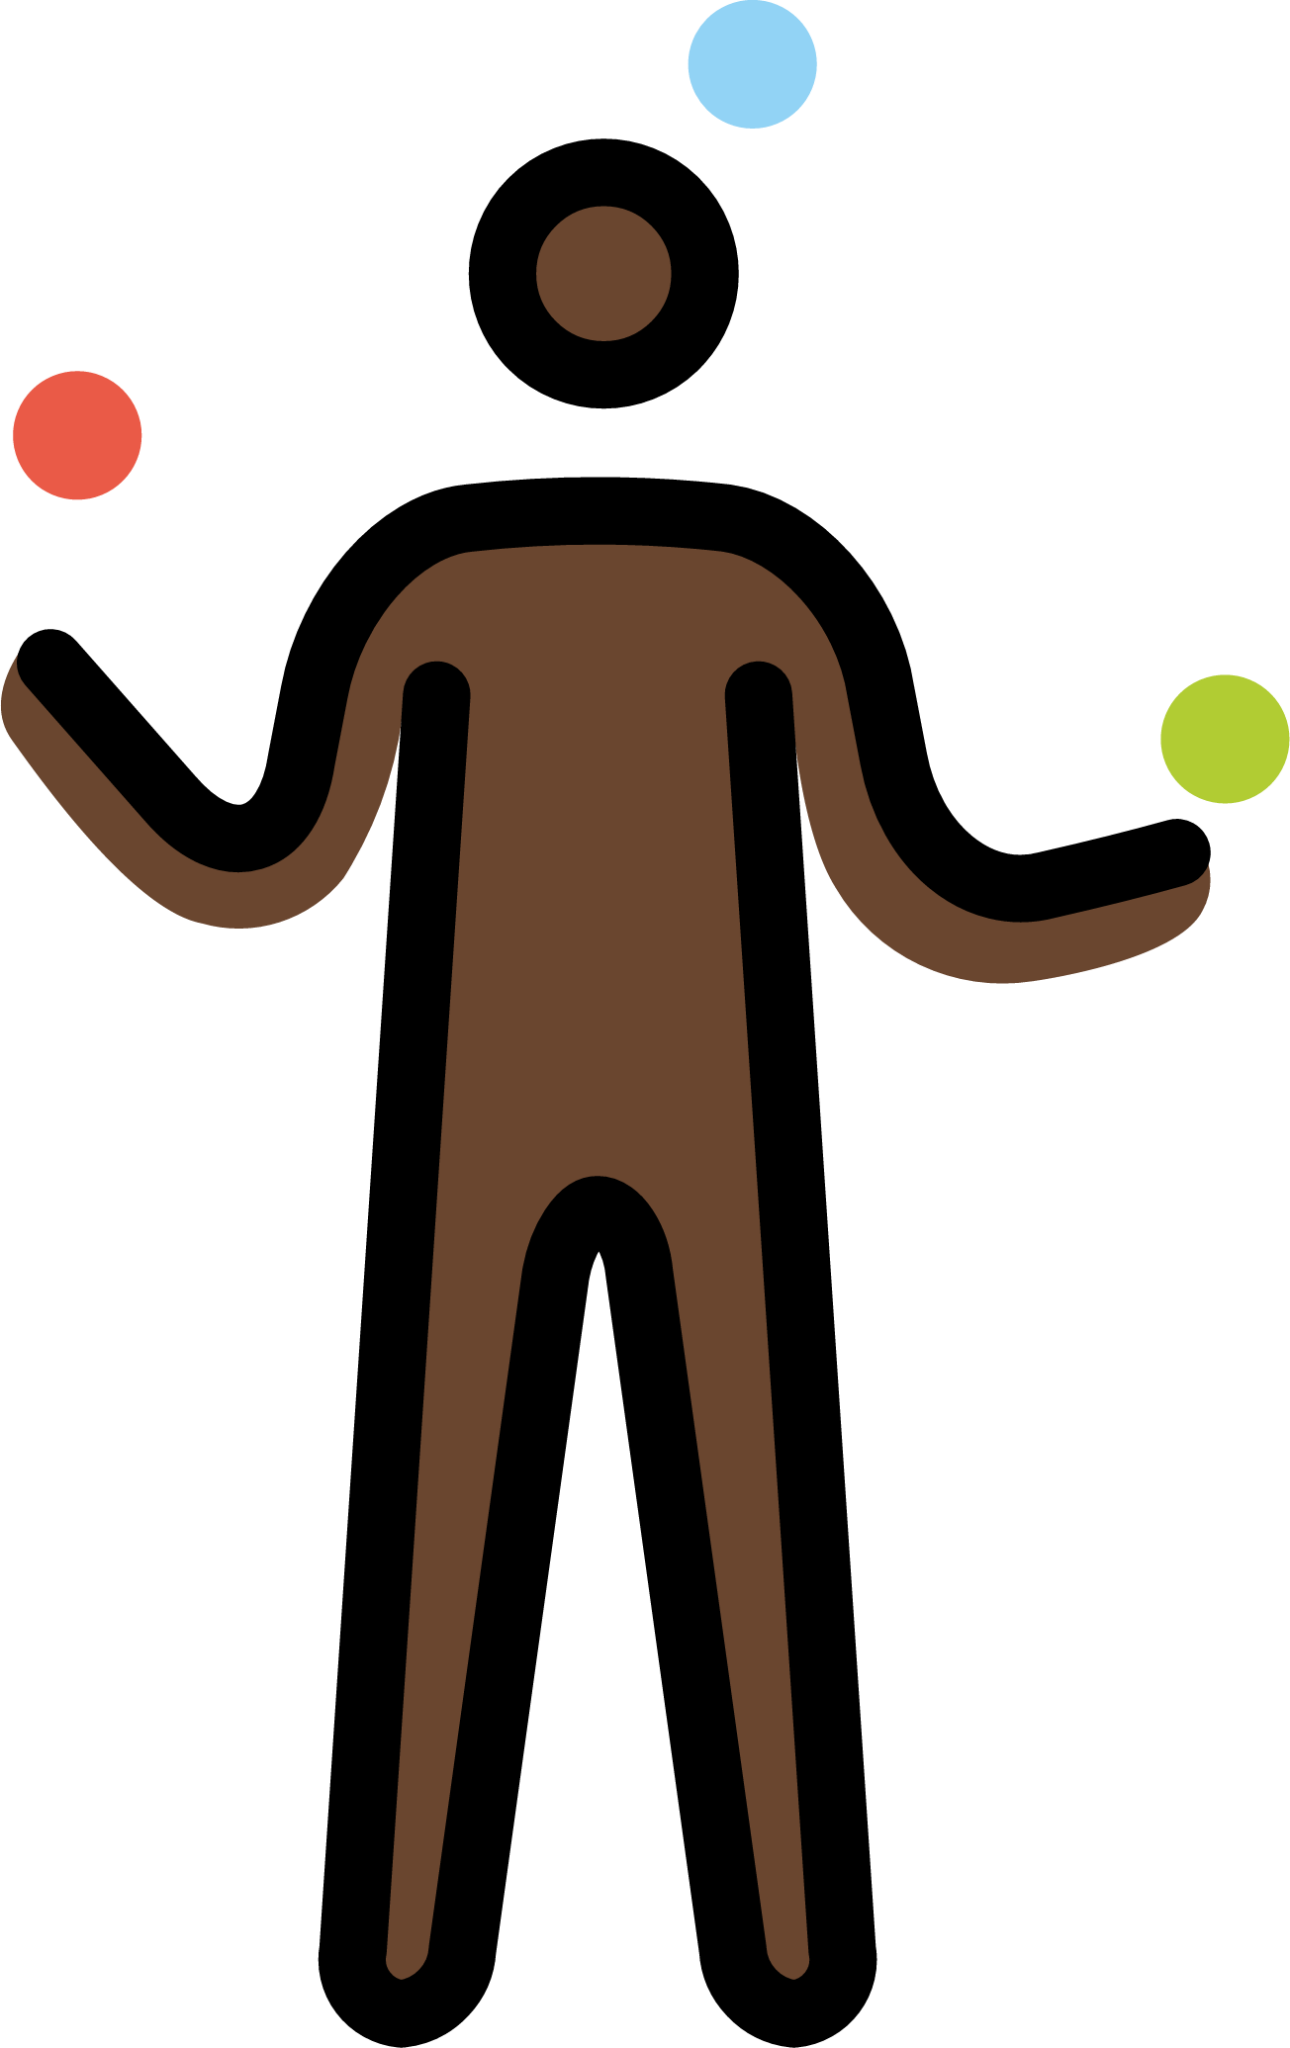 man juggling: dark skin tone emoji